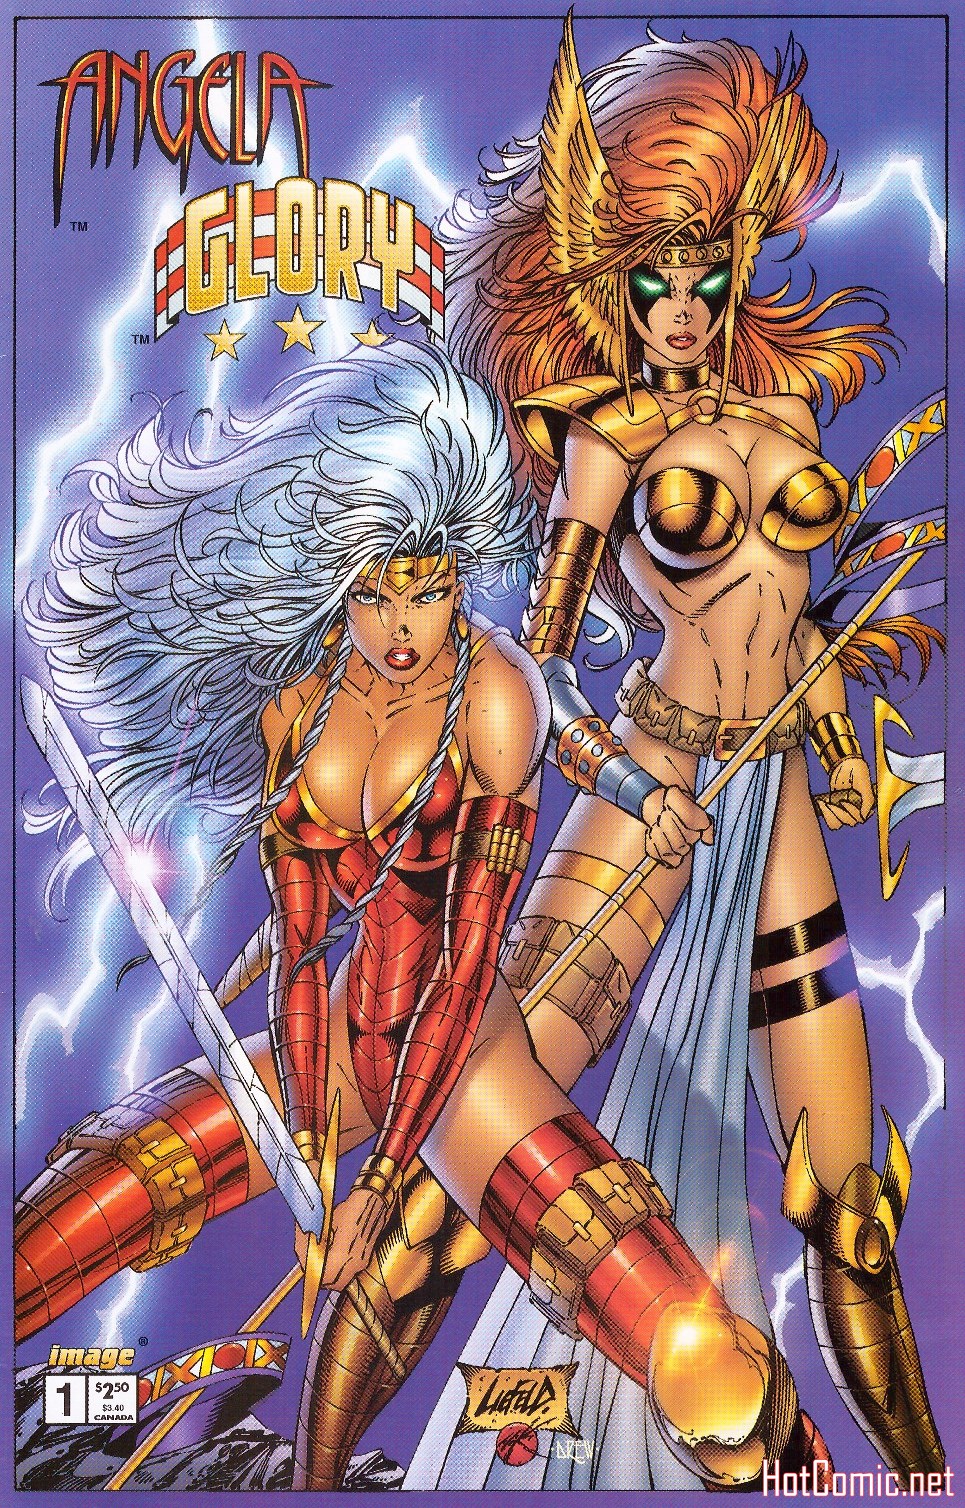 Angela Glory Rage of Angels #1 by Image comics – Spartan Comics